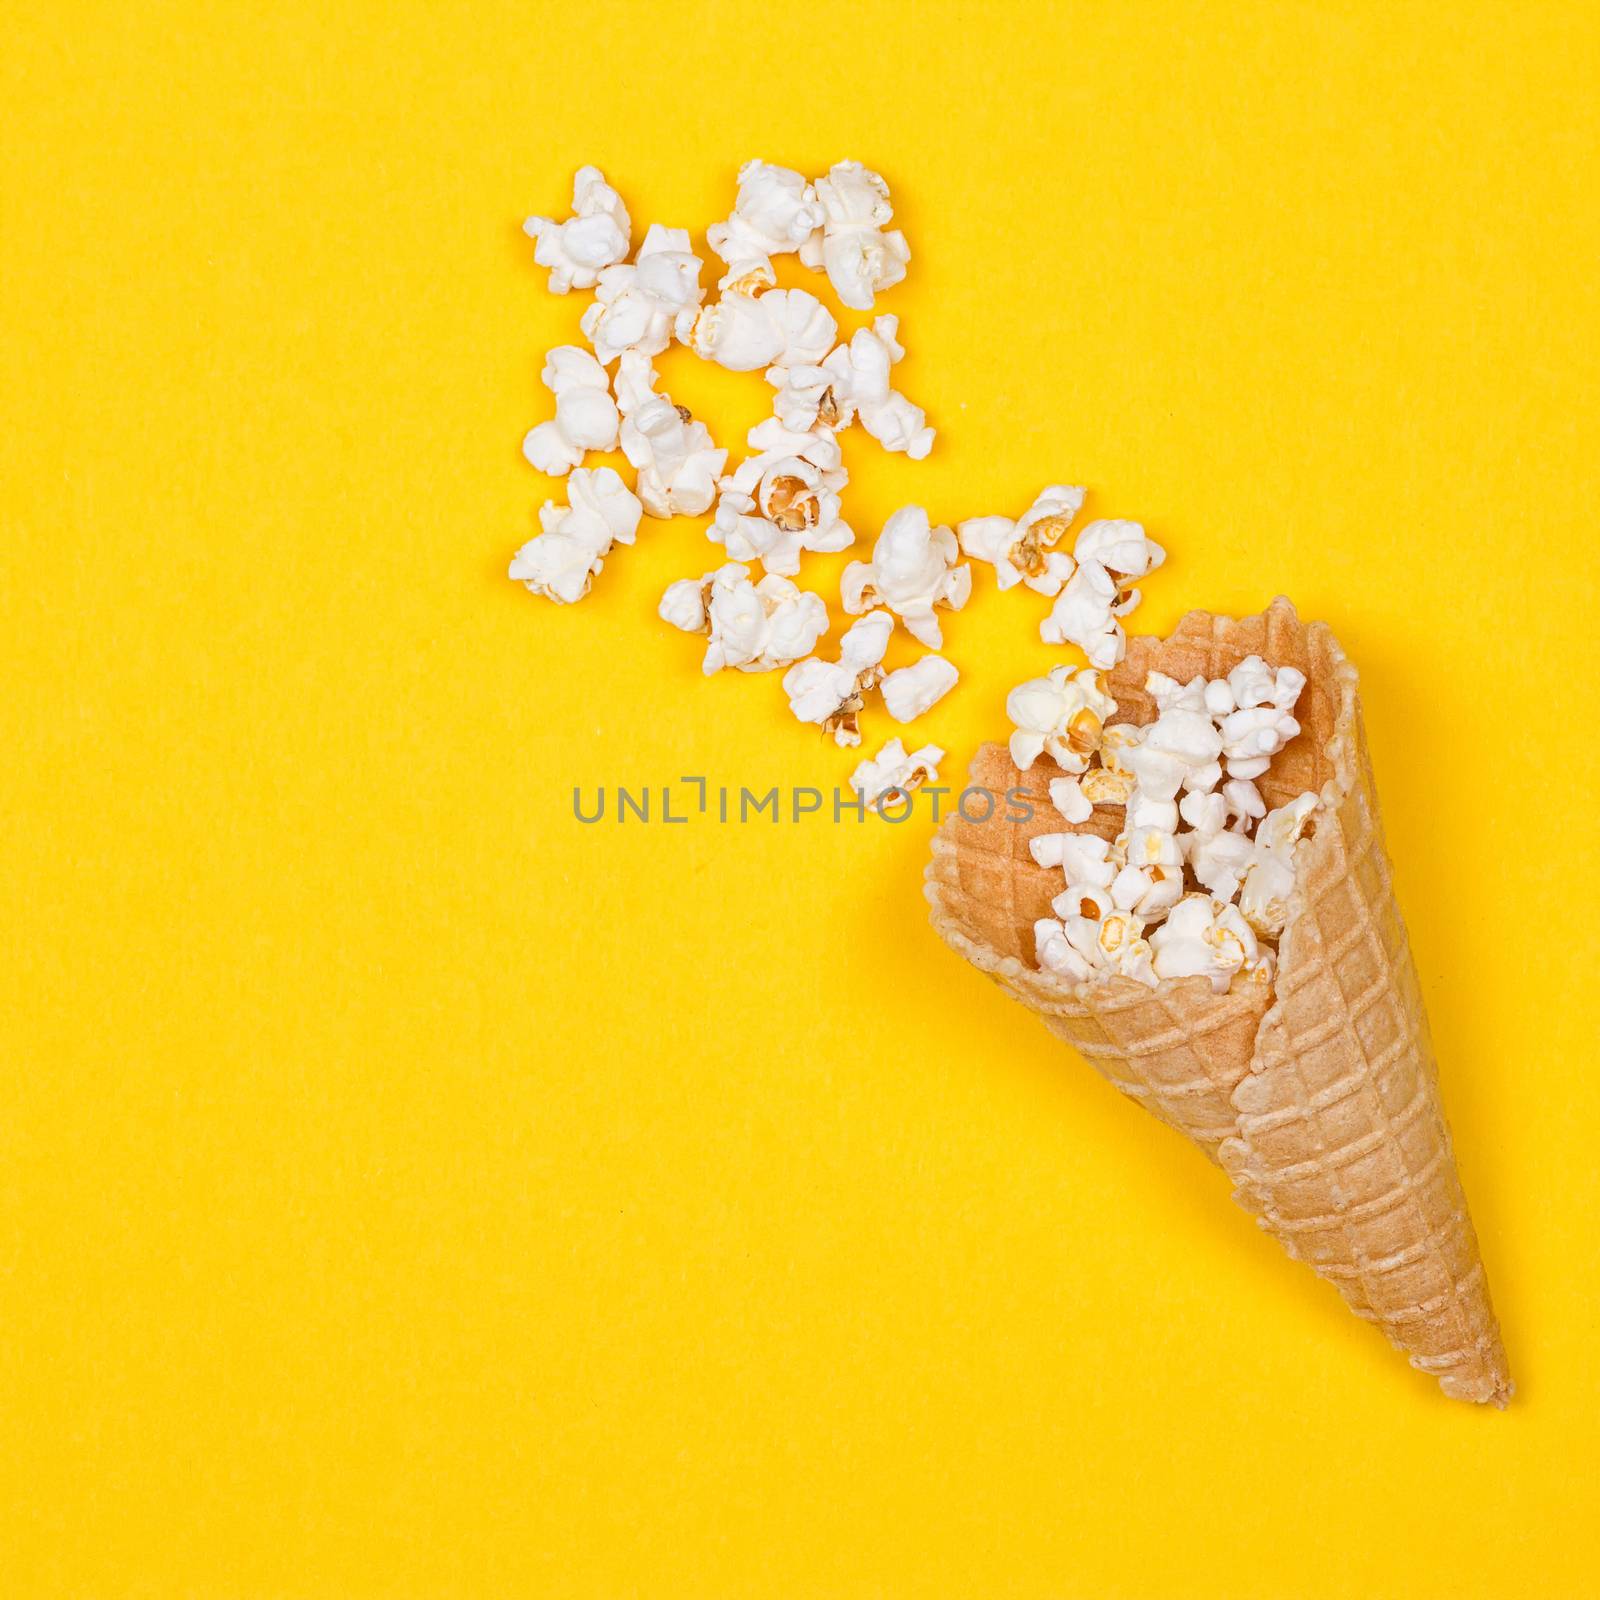 Popcorn in ice cream cones by victosha